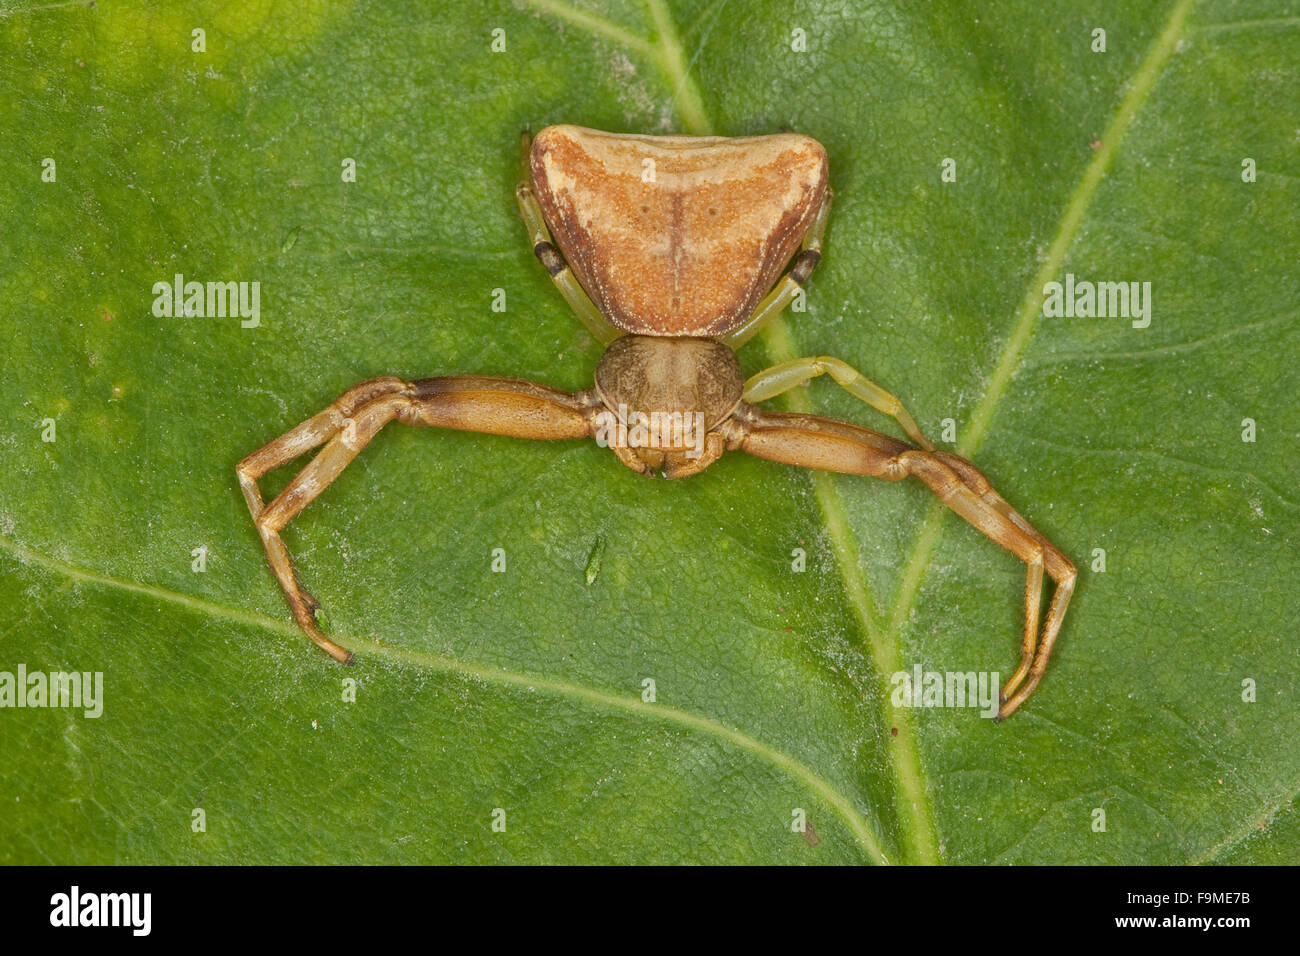 Araignée Crabe, femme, Krabbenspinne Weibchen Pistius truncatus,,,,, Krabbenspinnen Thomisidae araignées-crabes Banque D'Images